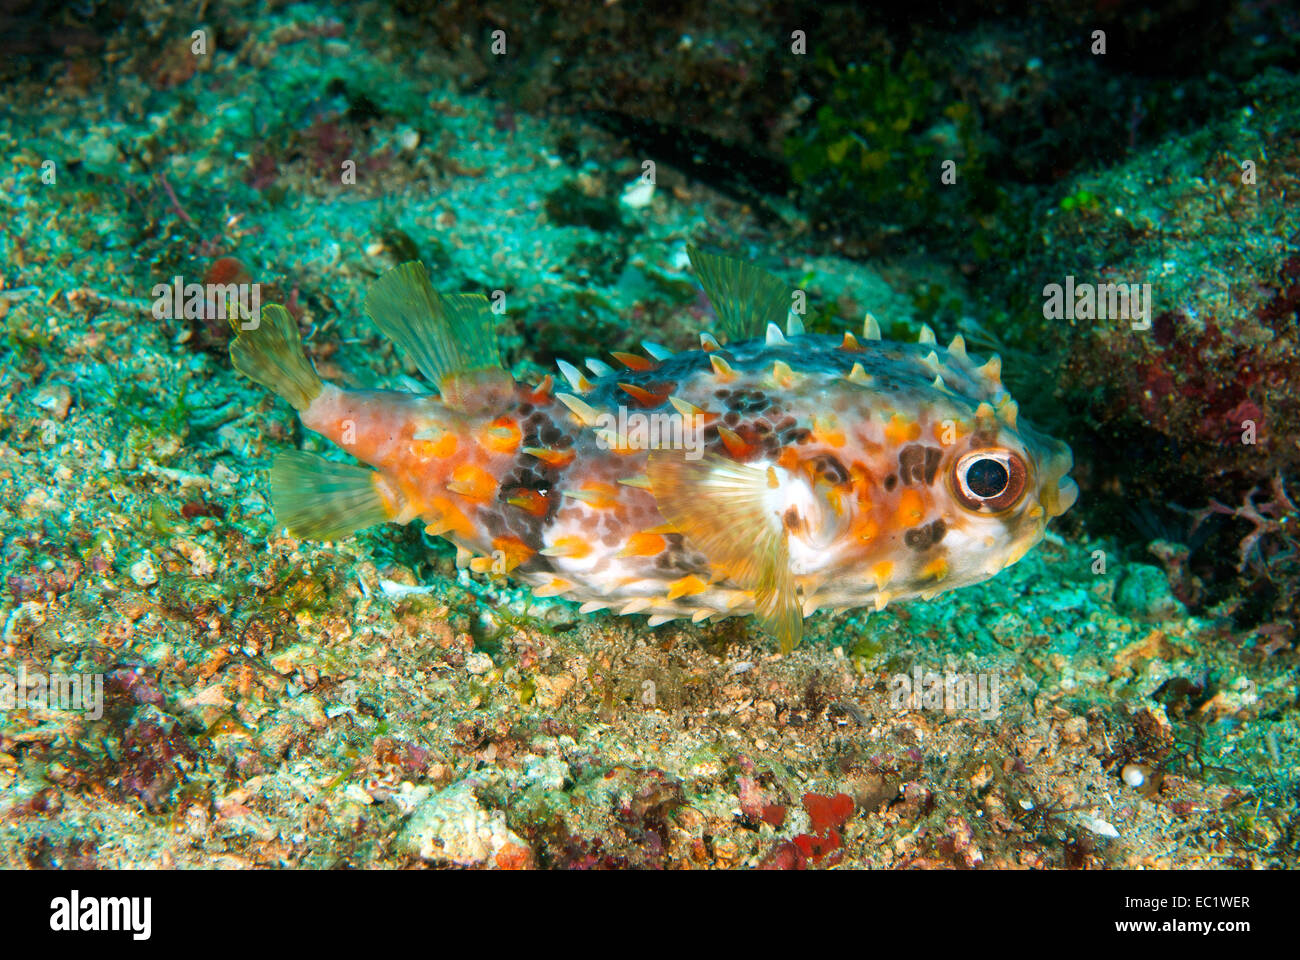 Burrfish orbiculaire (Cyclichthys orbicularis) Banque D'Images